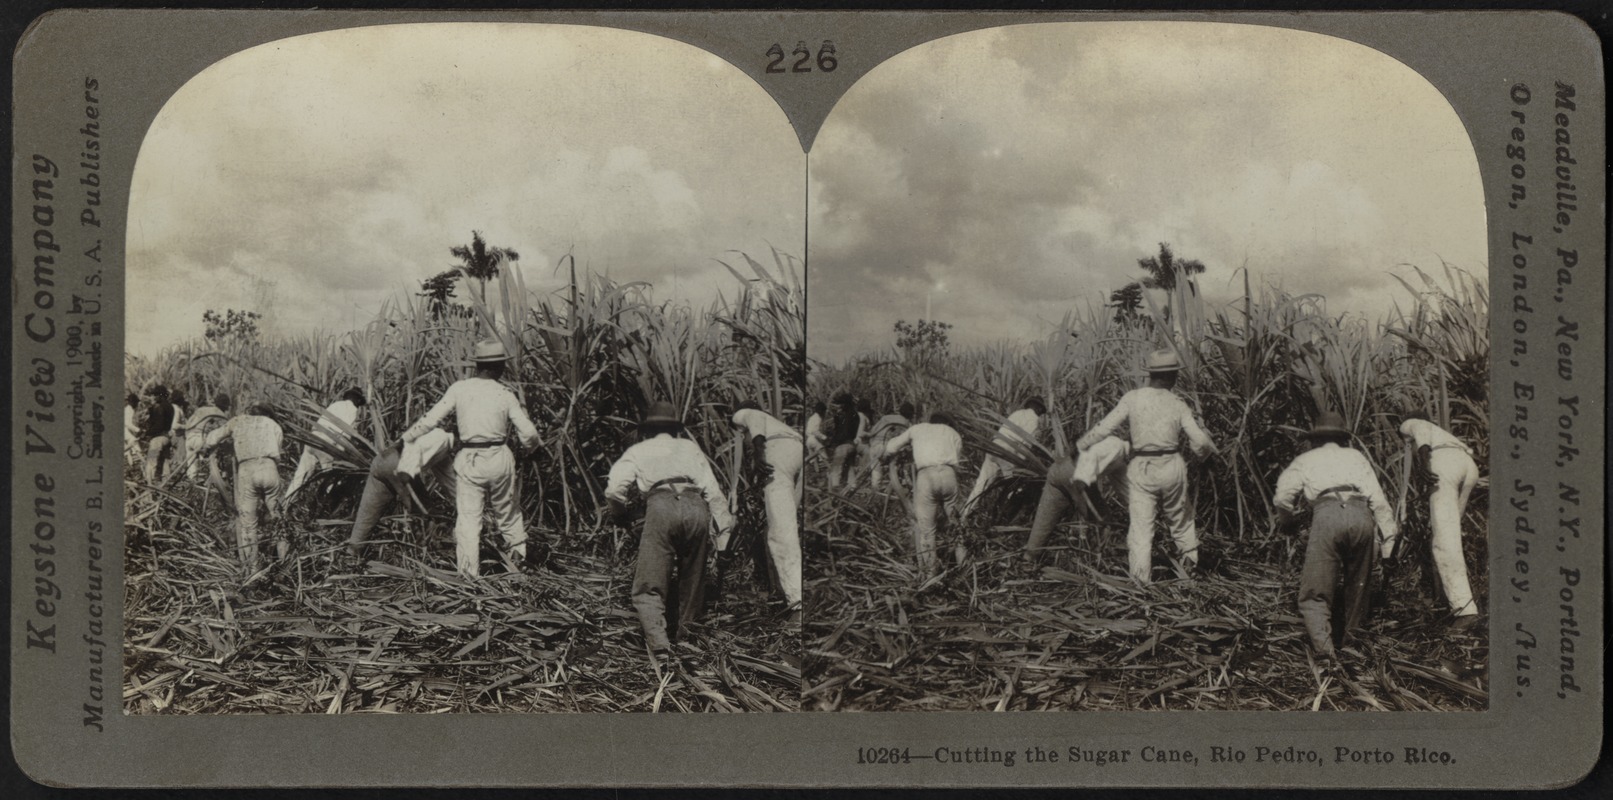 Cutting the sugar cane, Porto Rico